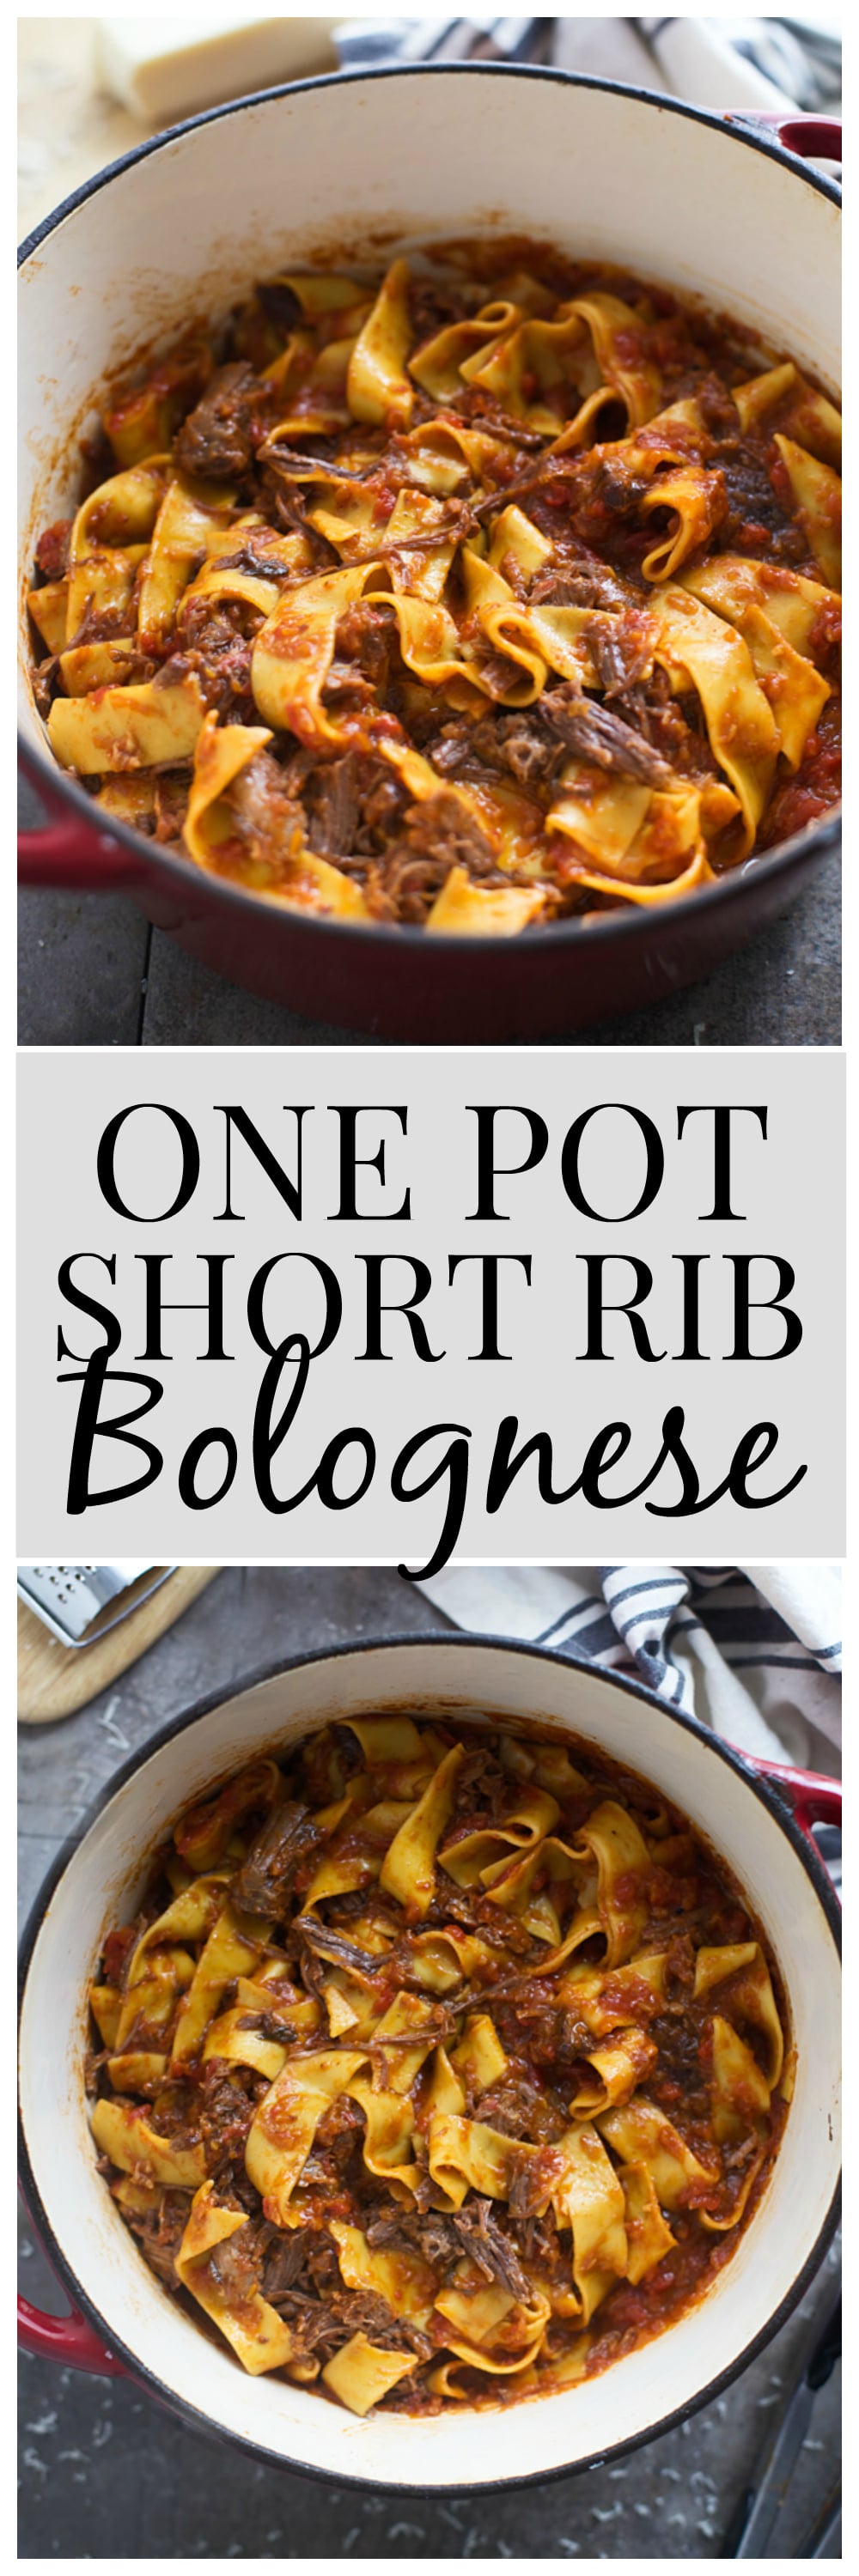 One Pot Short Rib Bolognese